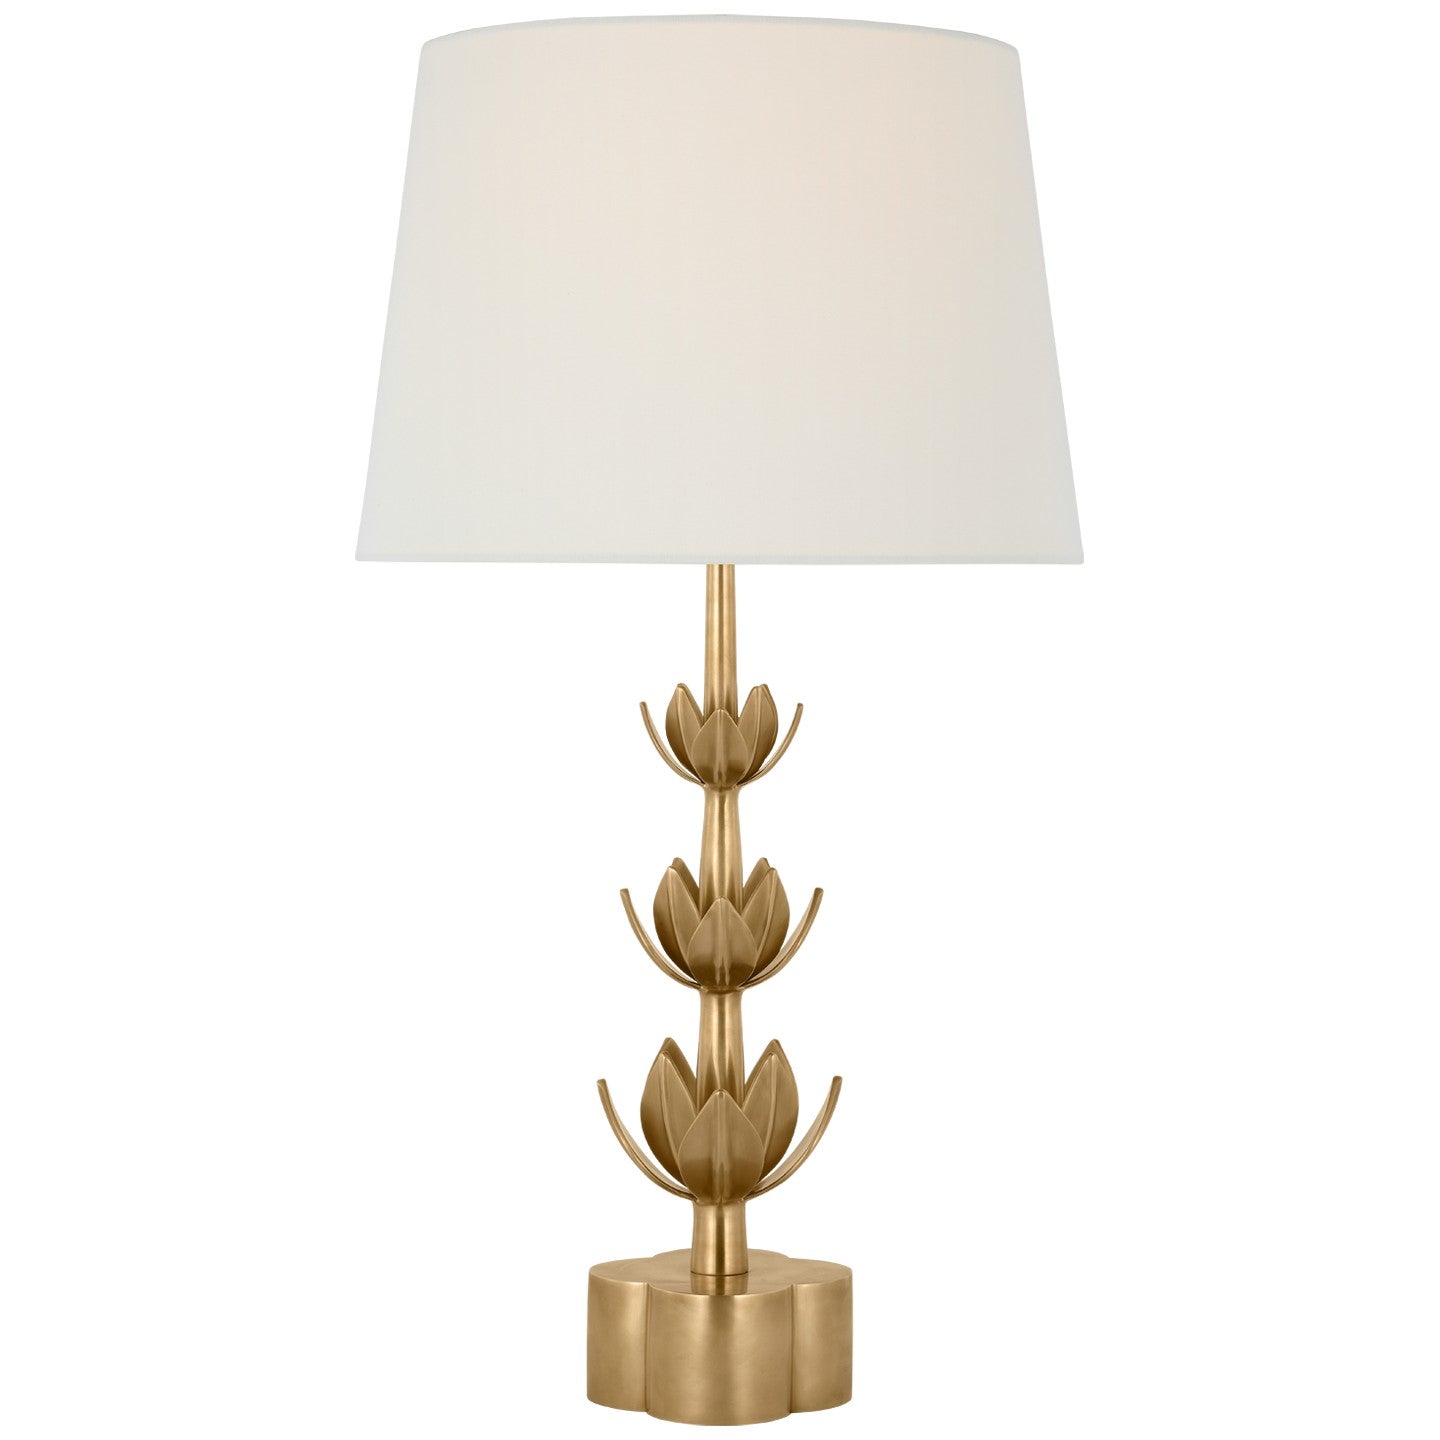 Visual Comfort Signature Canada - One Light Table Lamp - Alberto - Antique-Burnished Brass- Union Lighting Luminaires Decor